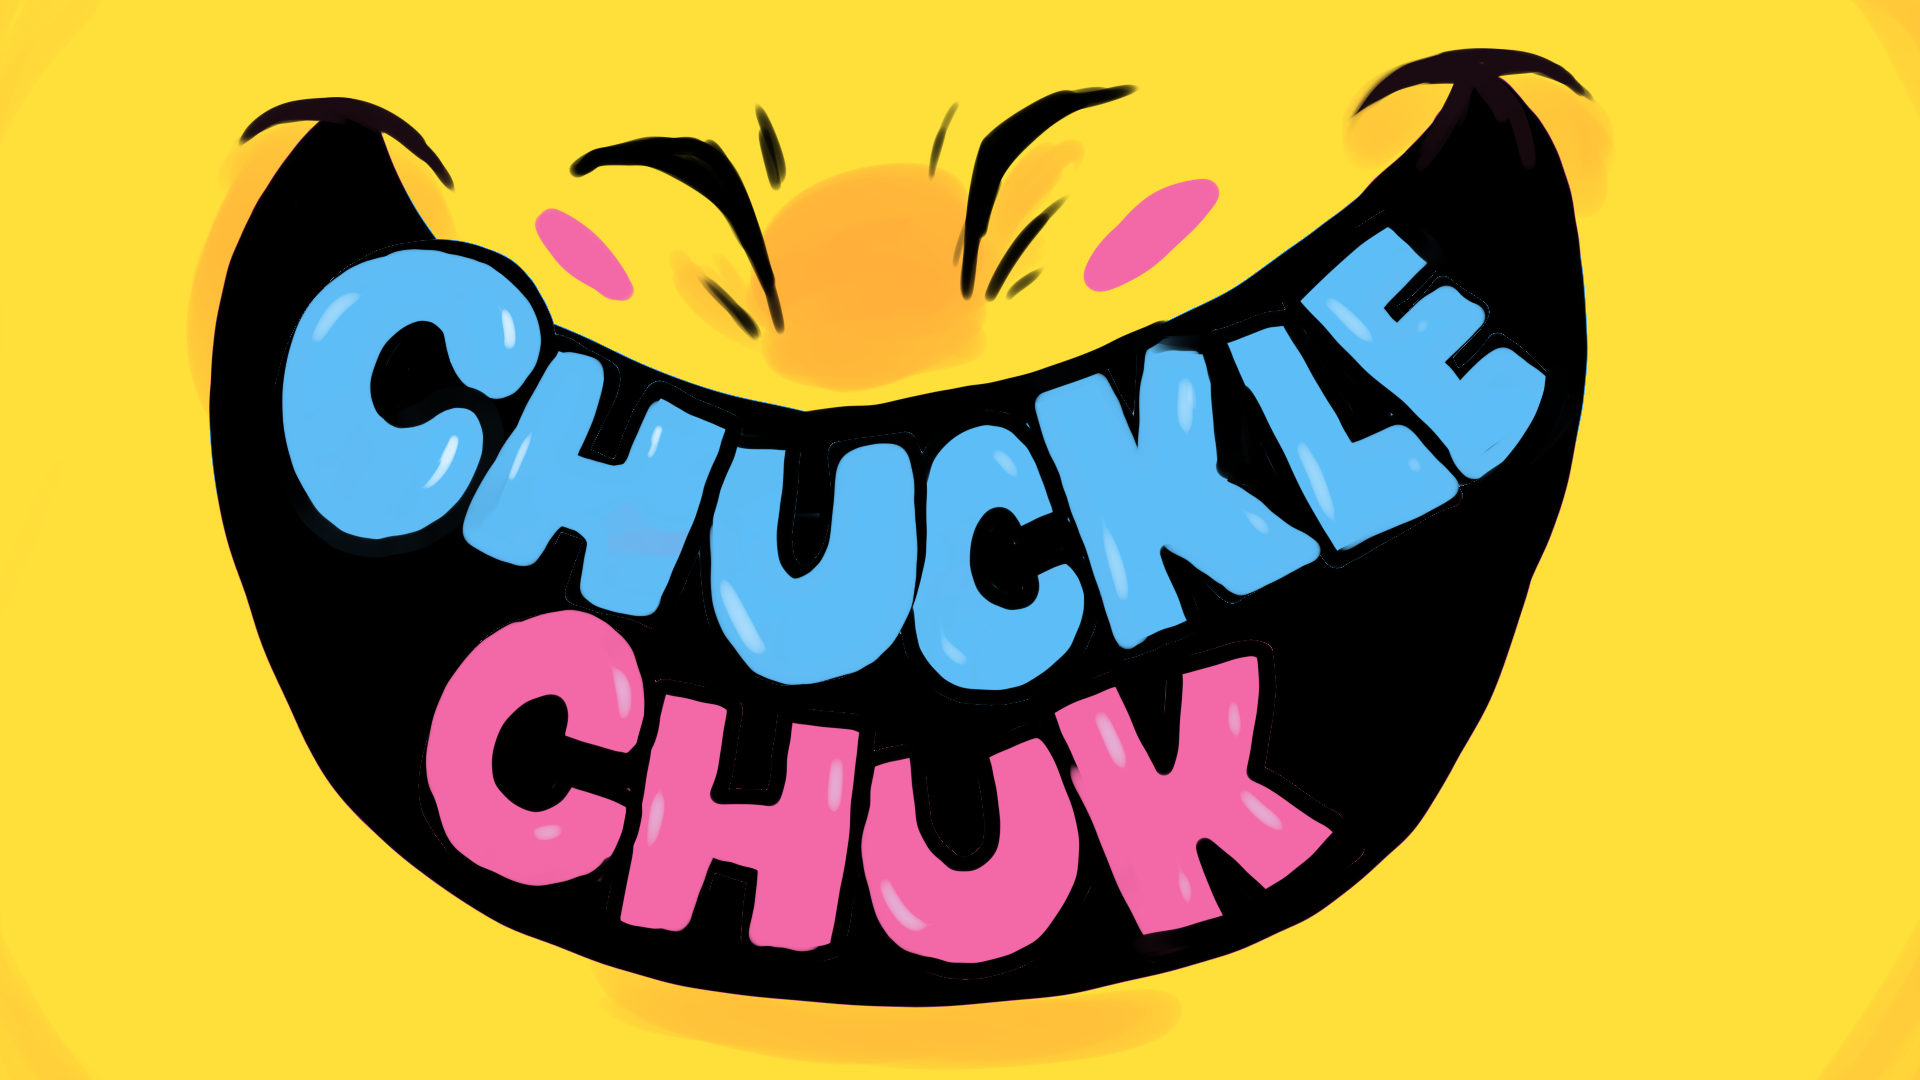 Chuckle Chuk